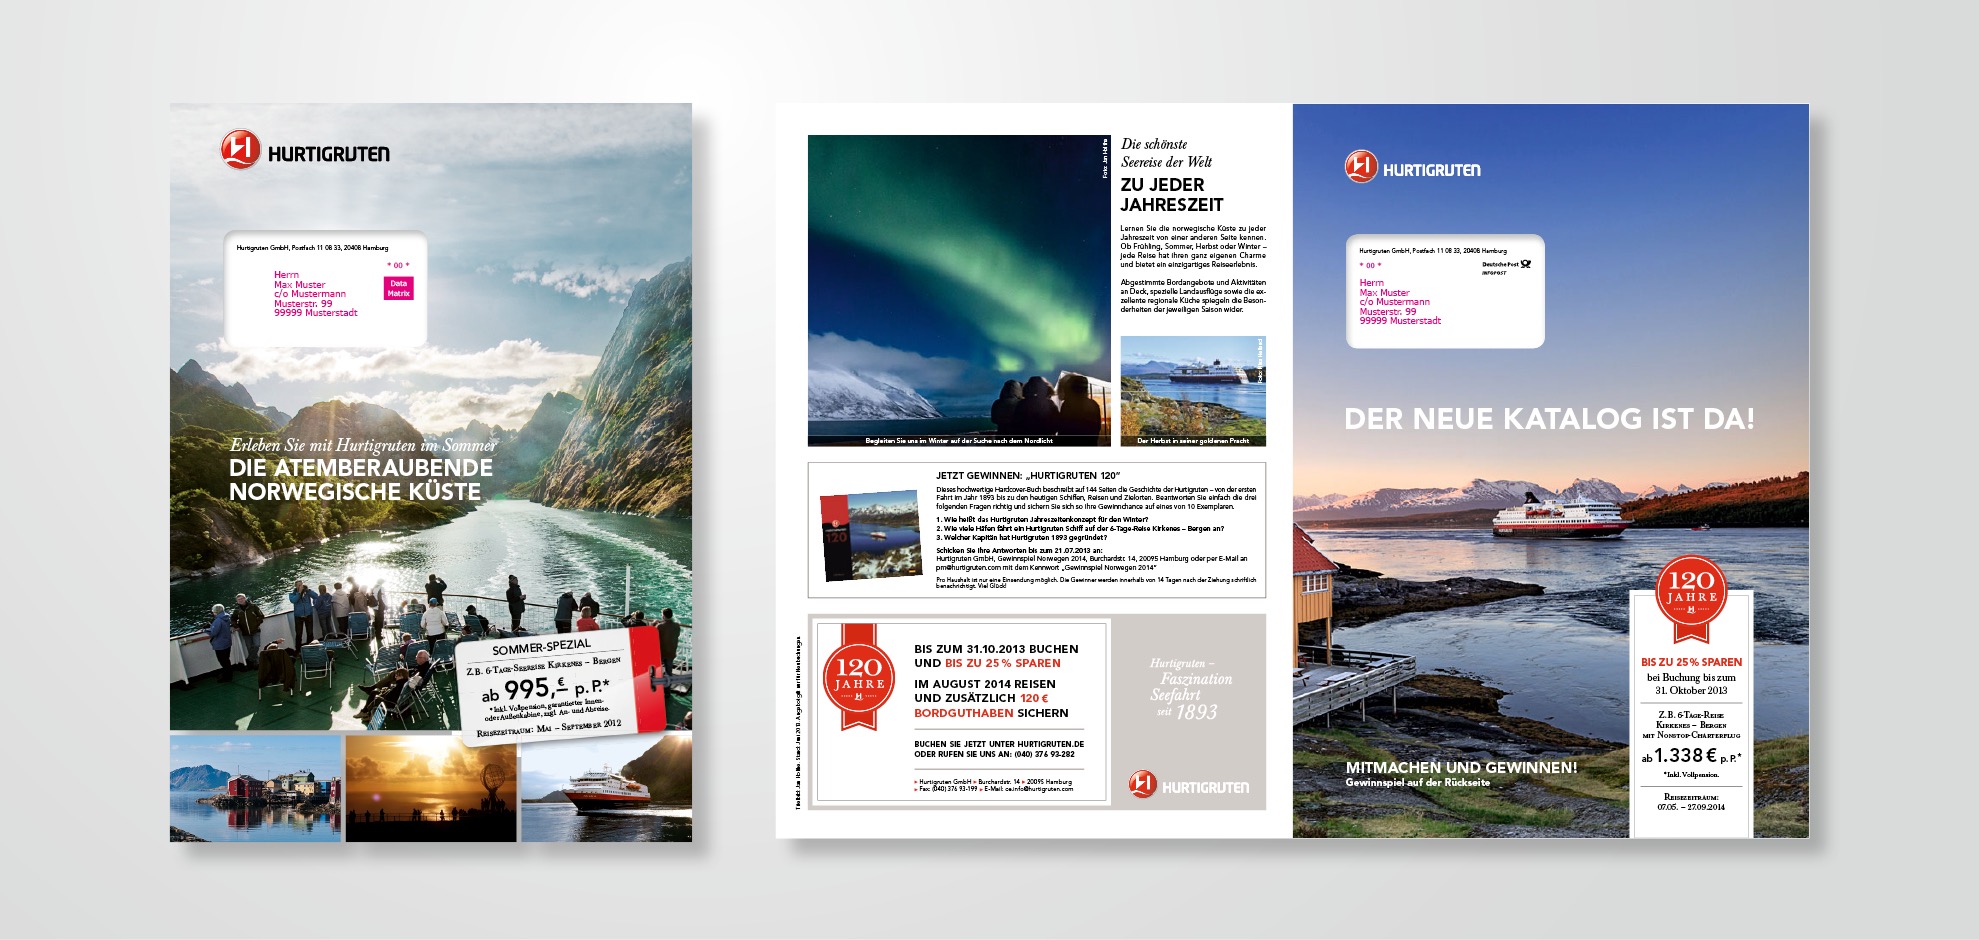 Destinationsmarketing Case Study Hurtigruten | exemplarische Direct-Mailings